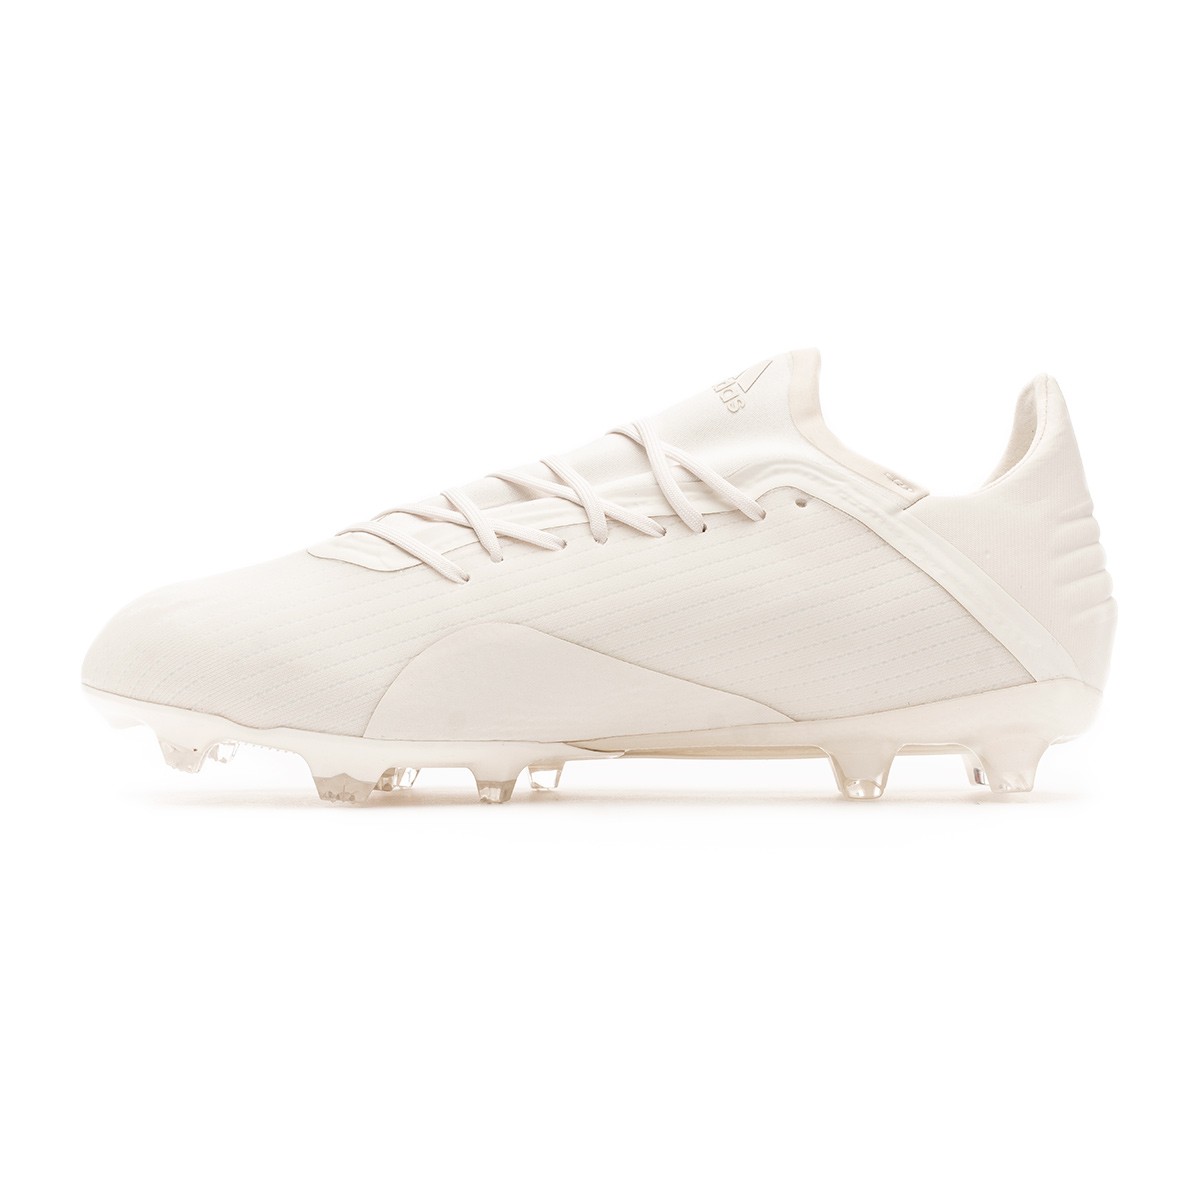 adidas white football shoes